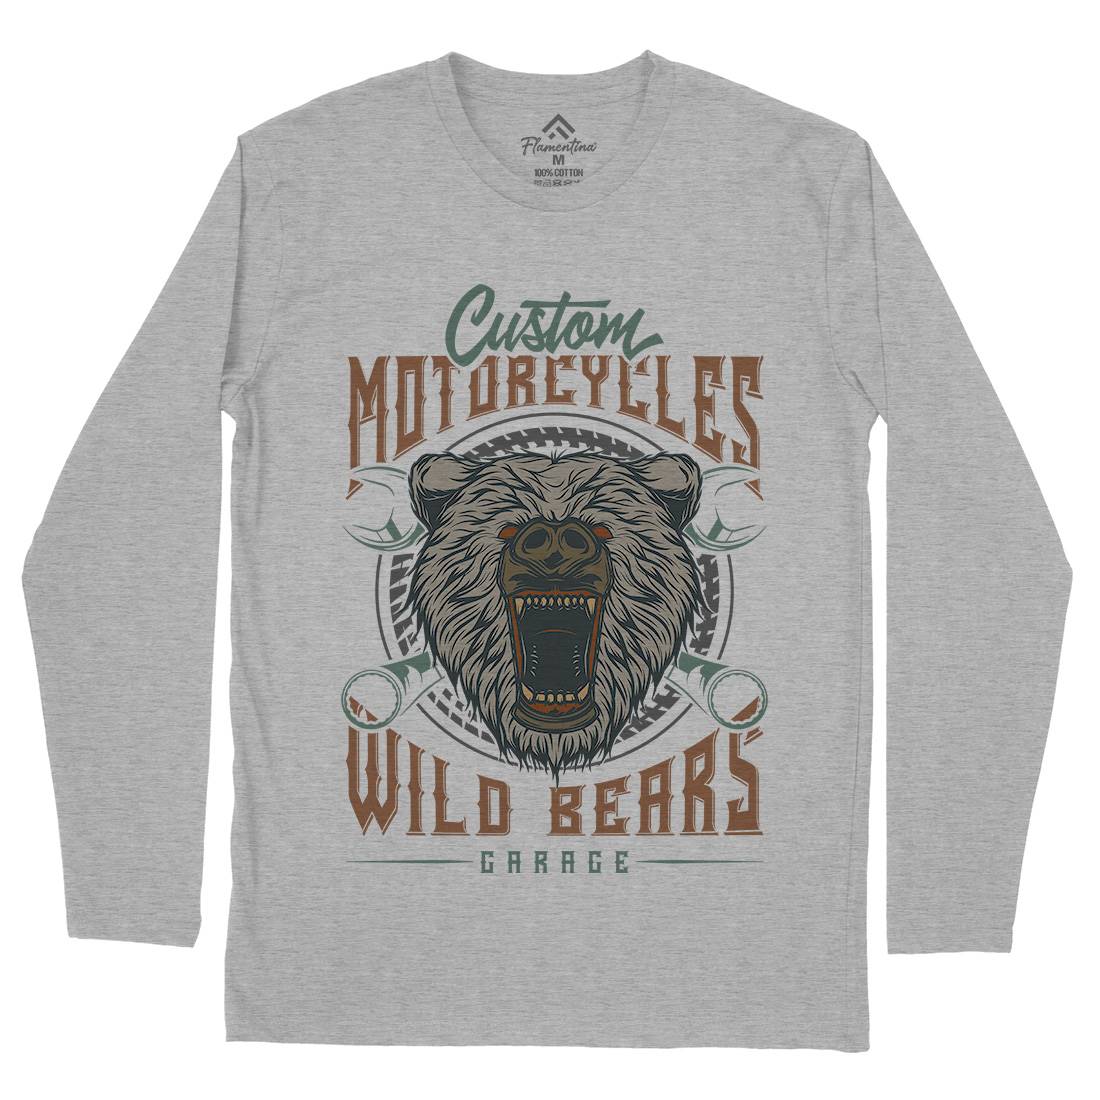 Wild Bears Mens Long Sleeve T-Shirt Motorcycles B788